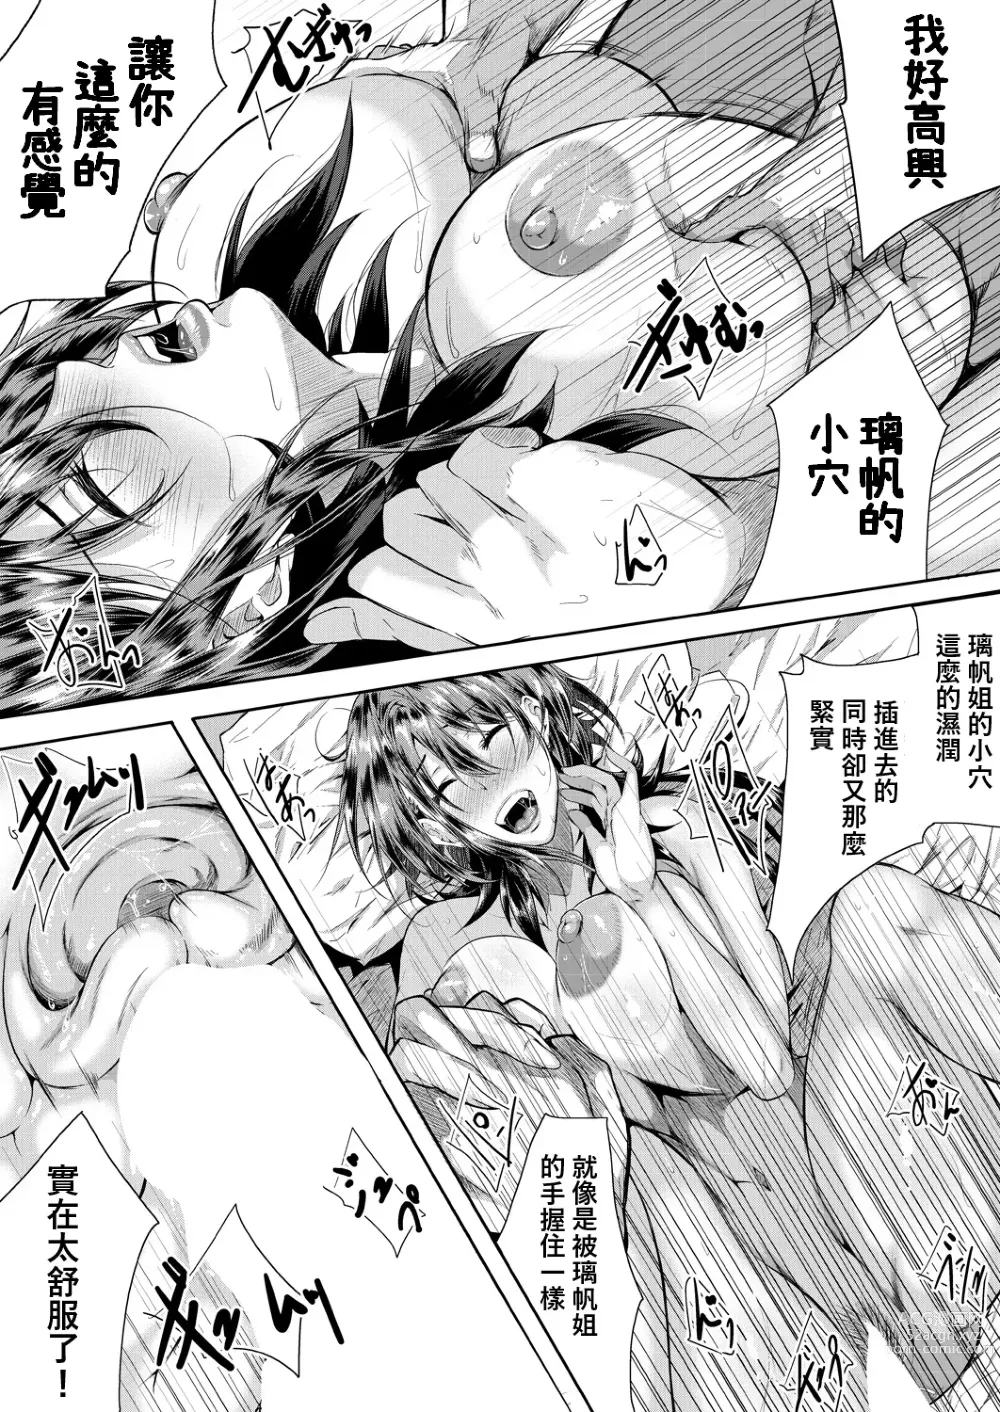 Page 39 of manga Strawberry Mermaid